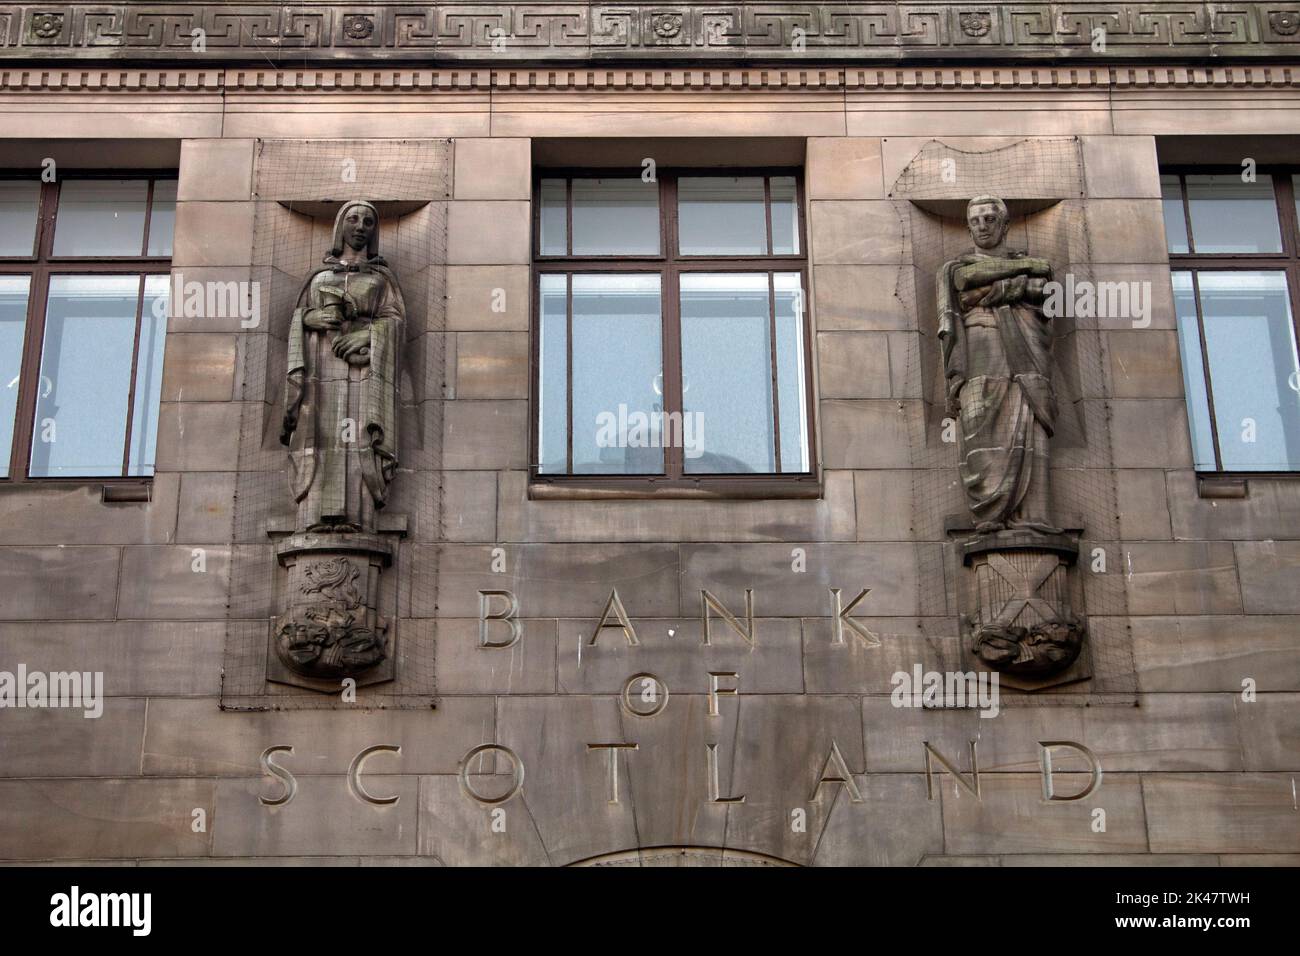 Statues on the Bank of Scotland building, Sauchiehall Street Glasgow, Scotland UK Stock Photo